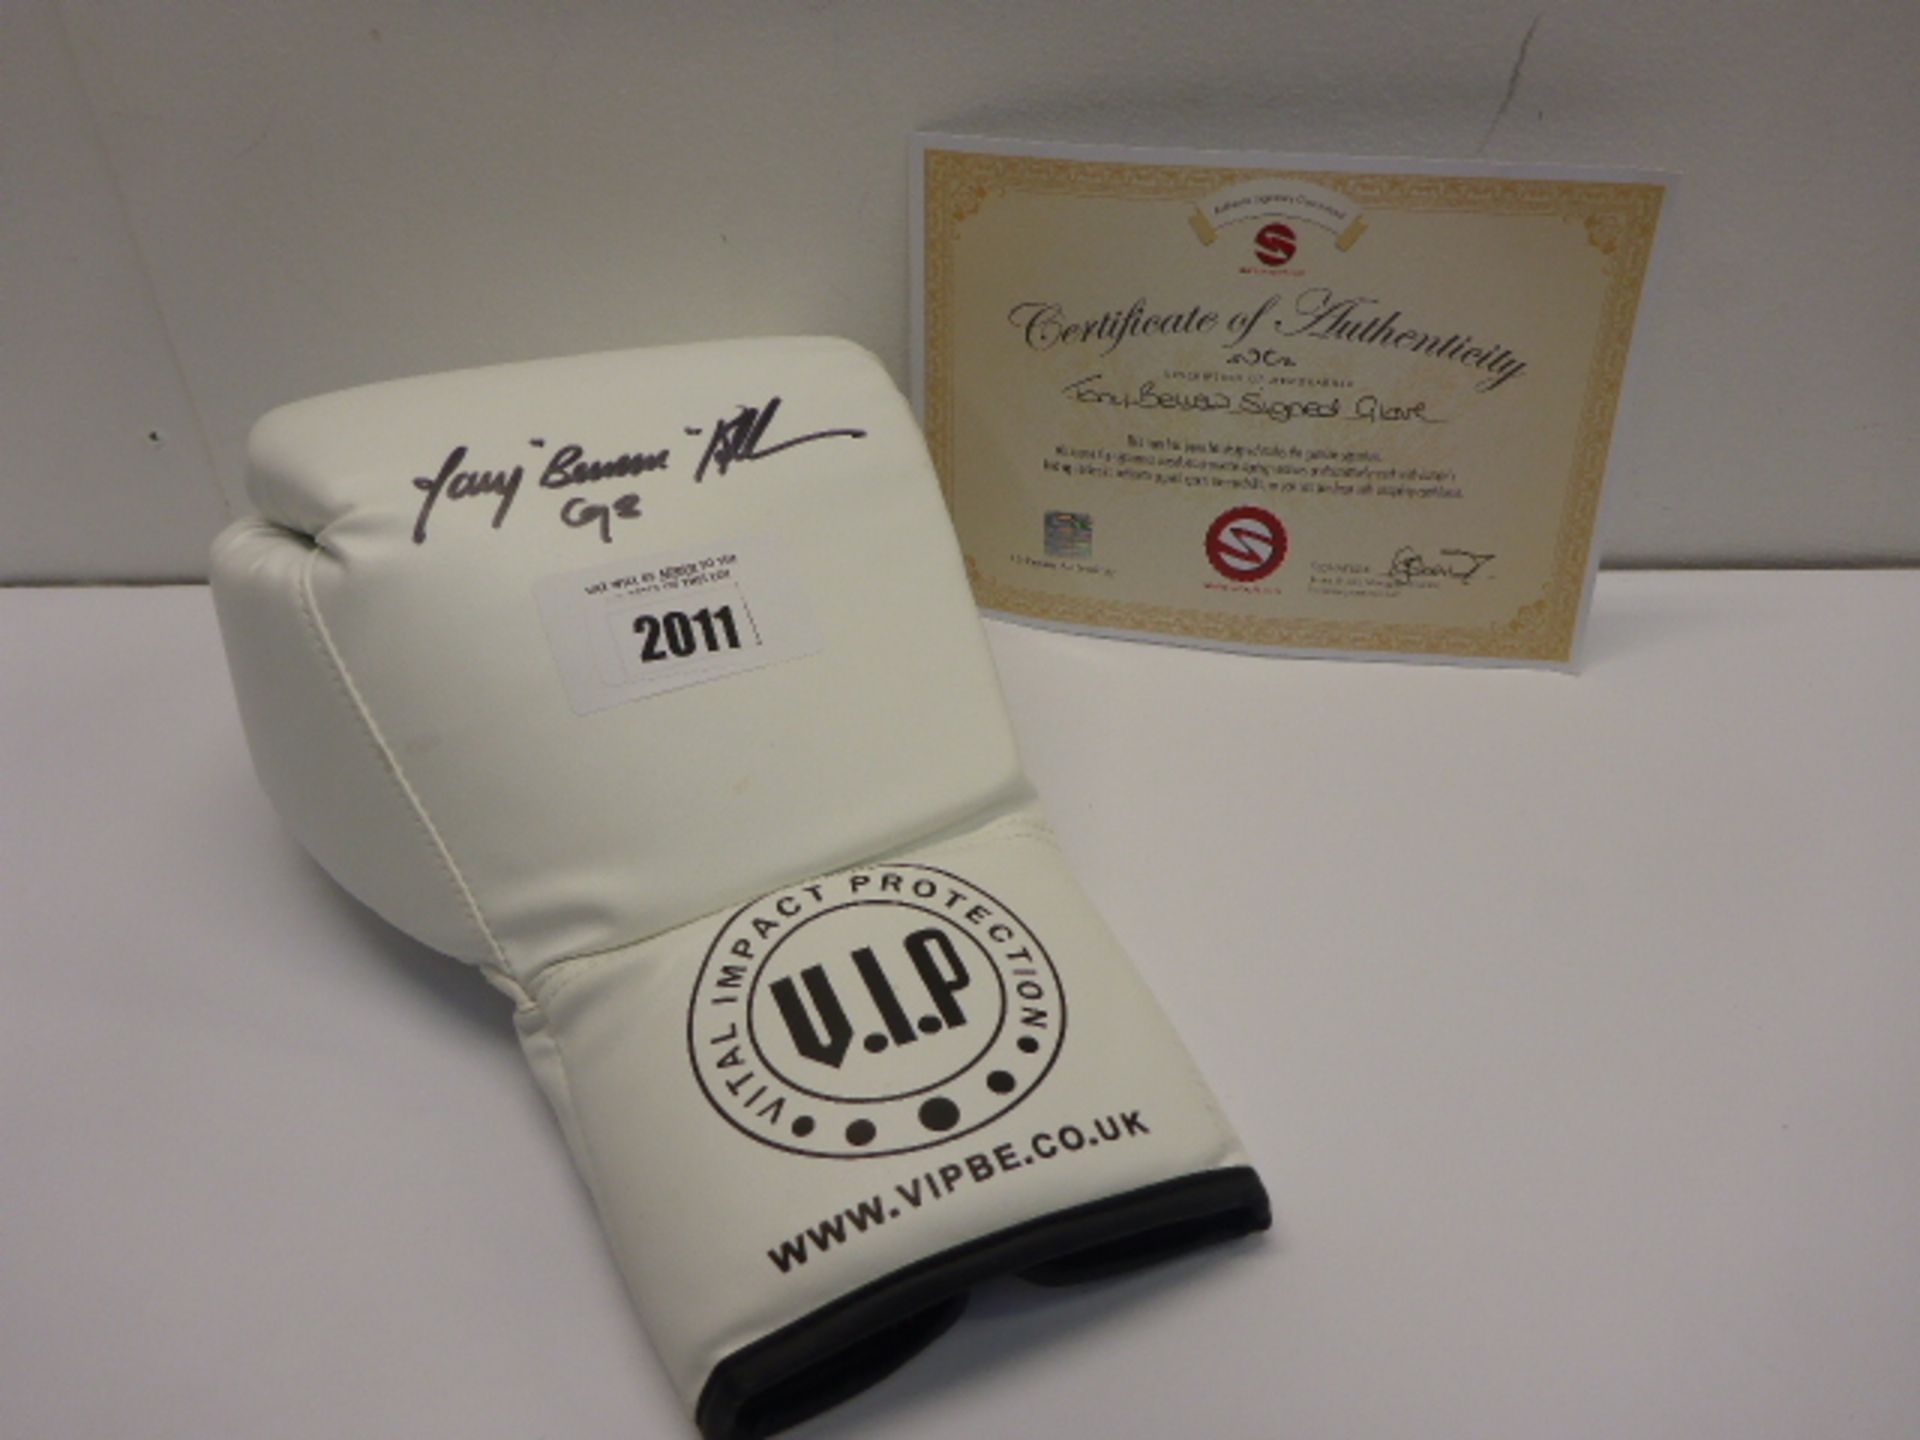 V.I.P. white boxing glove bearing signature of Tony Bellew (*UNVERIFIED*)